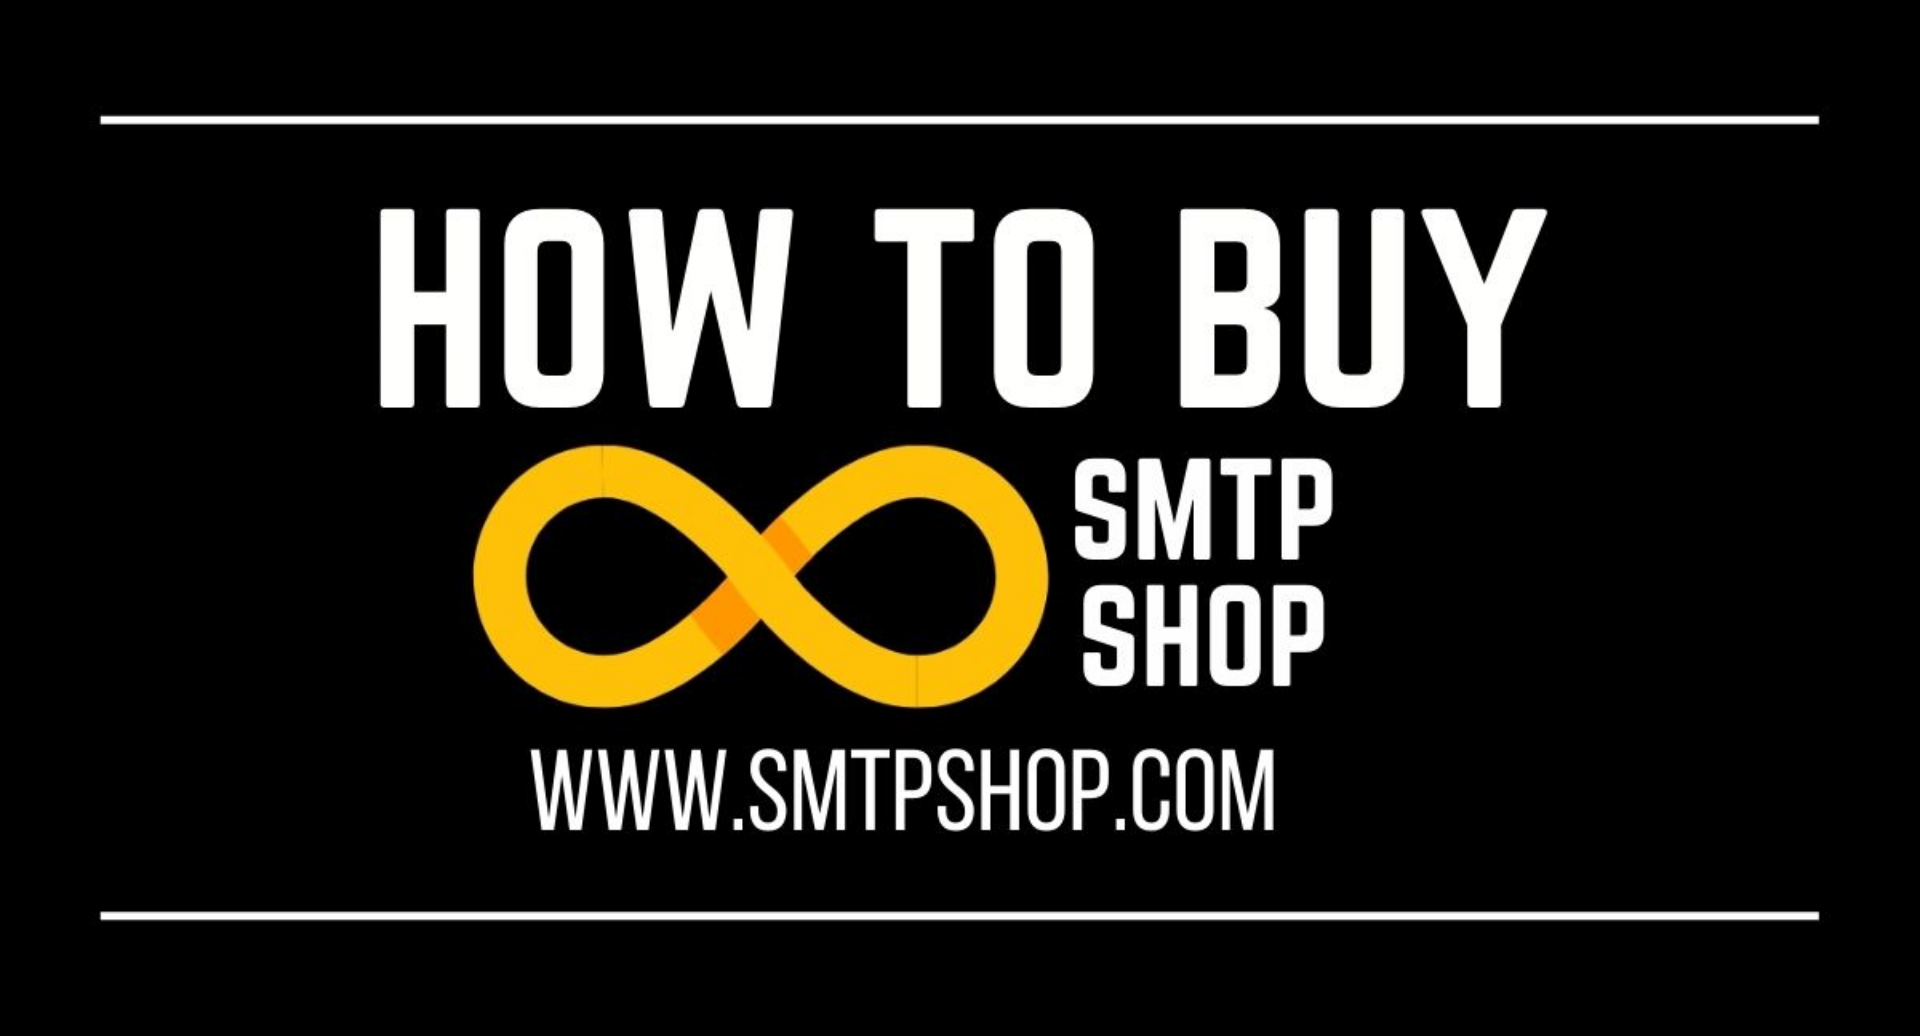 HOW TO BUY | SMTPSHOP